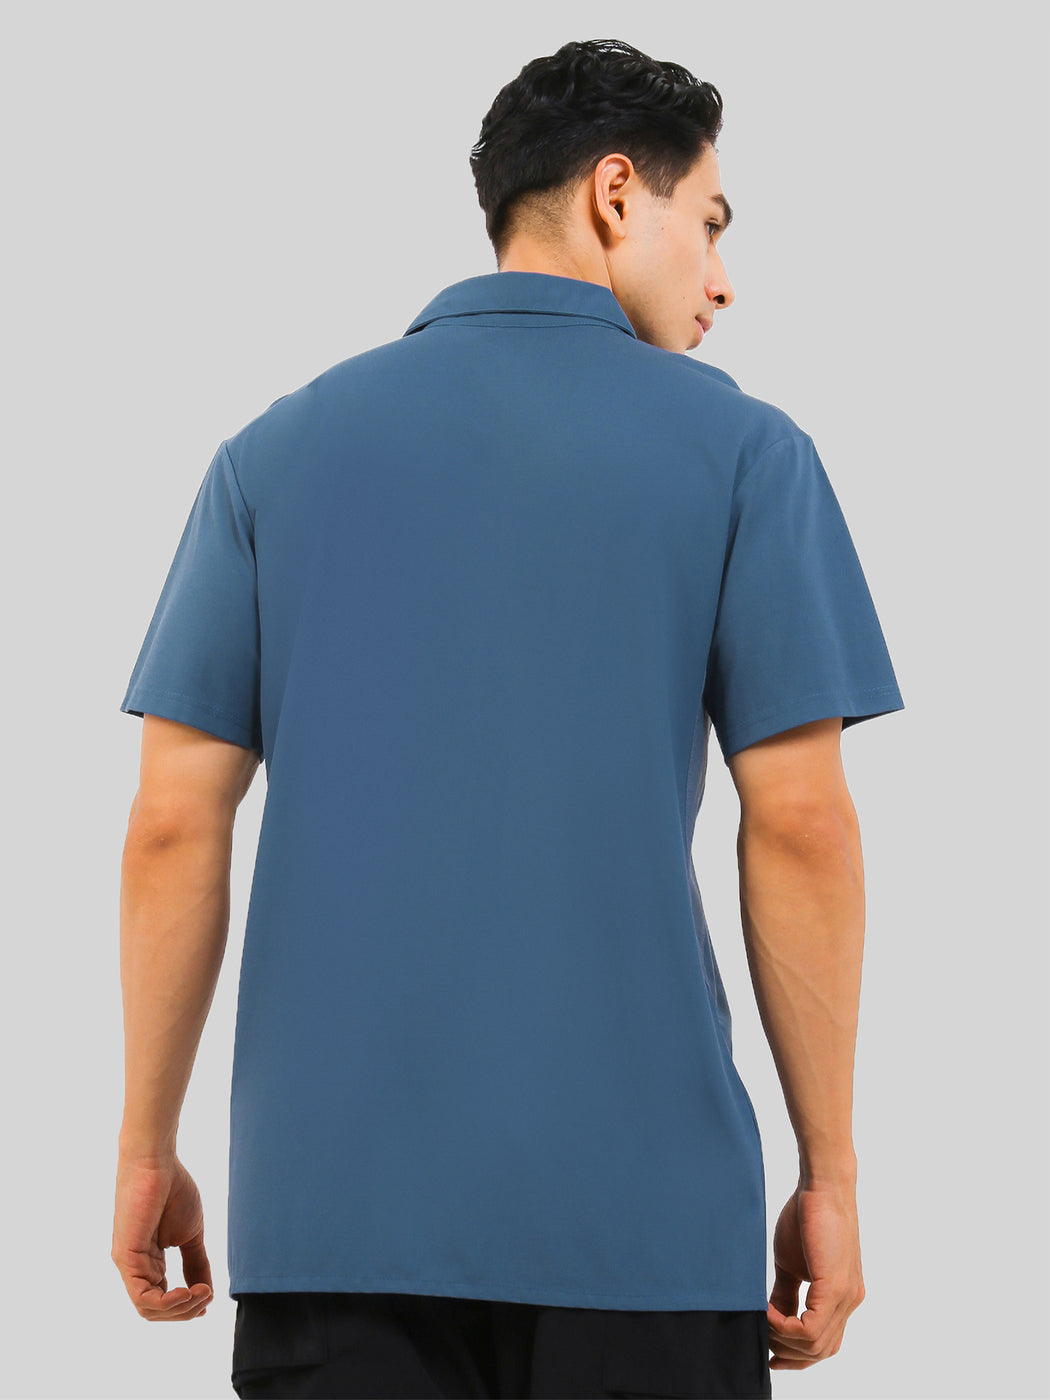 Unisex Ultimate Utilitarian Shirt Male Blue